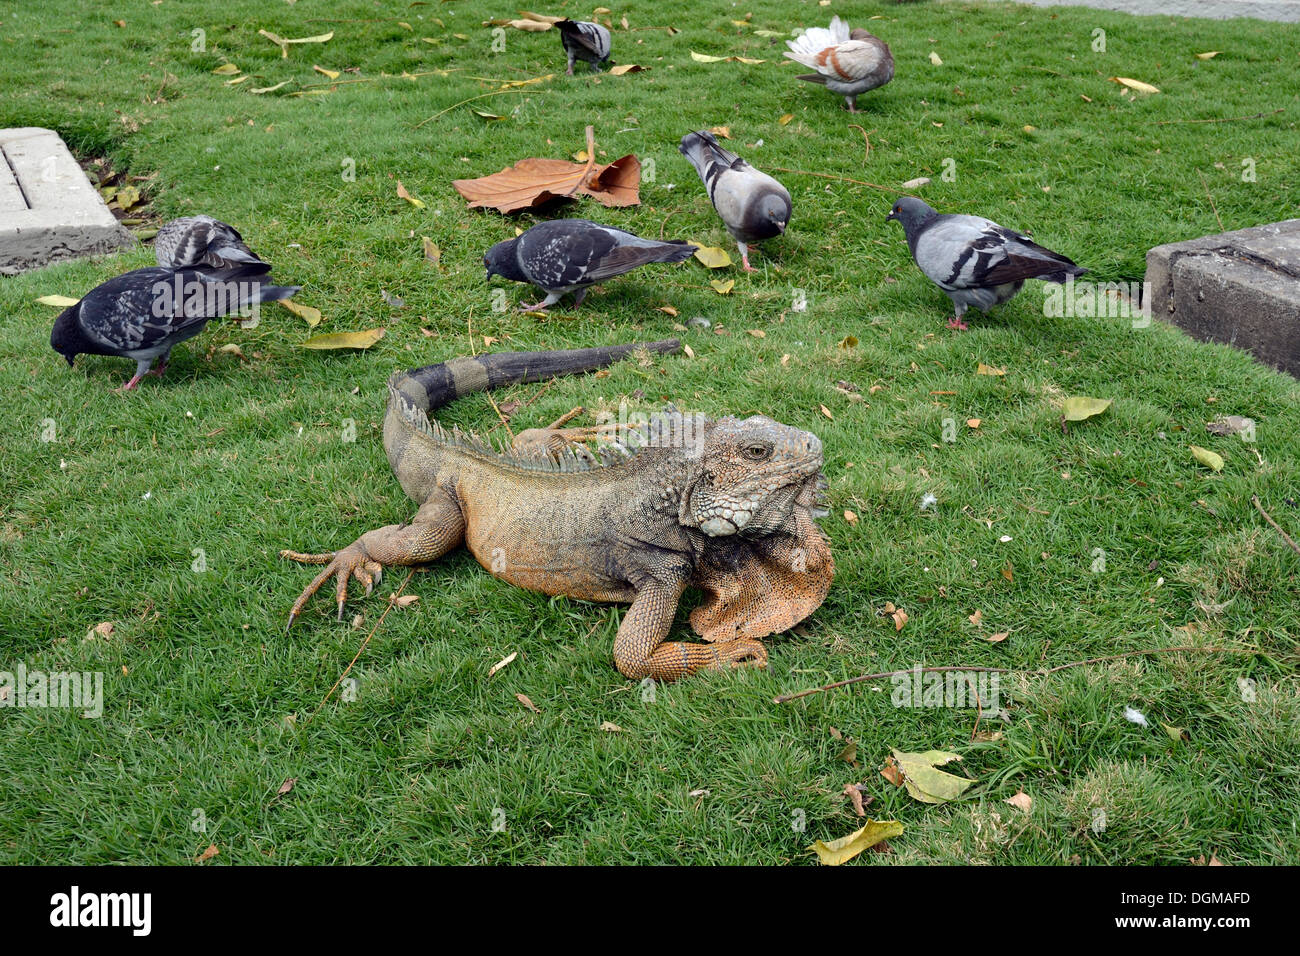 Green Iguanas (Iguana iguana terrestres) in Parque Seminario, Parque Bolivar or Parque de las Iguanas, Iguana Park, Guayaquil Stock Photo